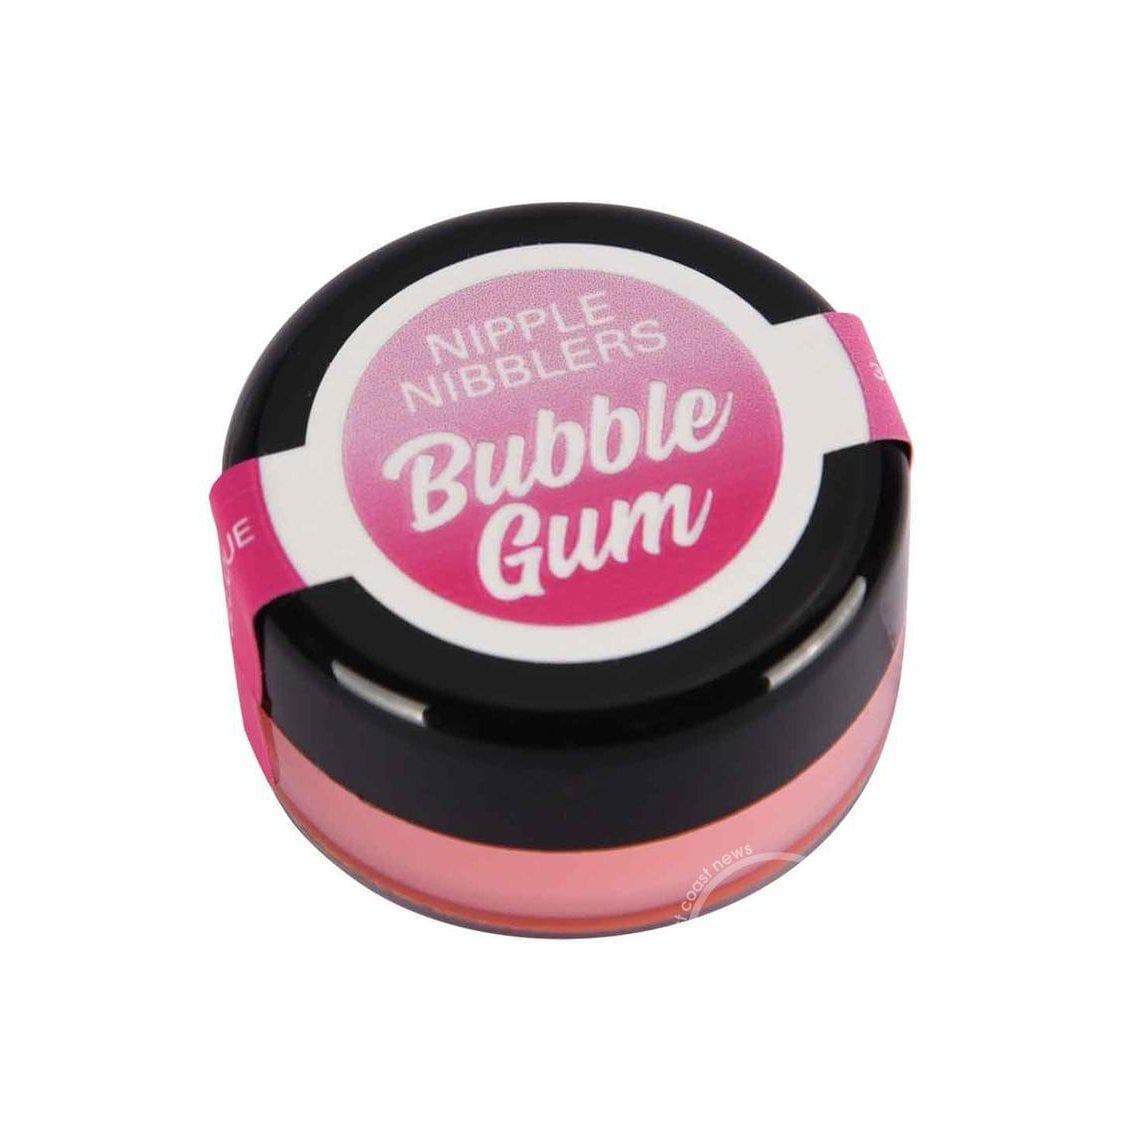 Jelique Nipple Nibblers Cool Tingle Balm Bubble Gum 3 gm - Romantic Blessings